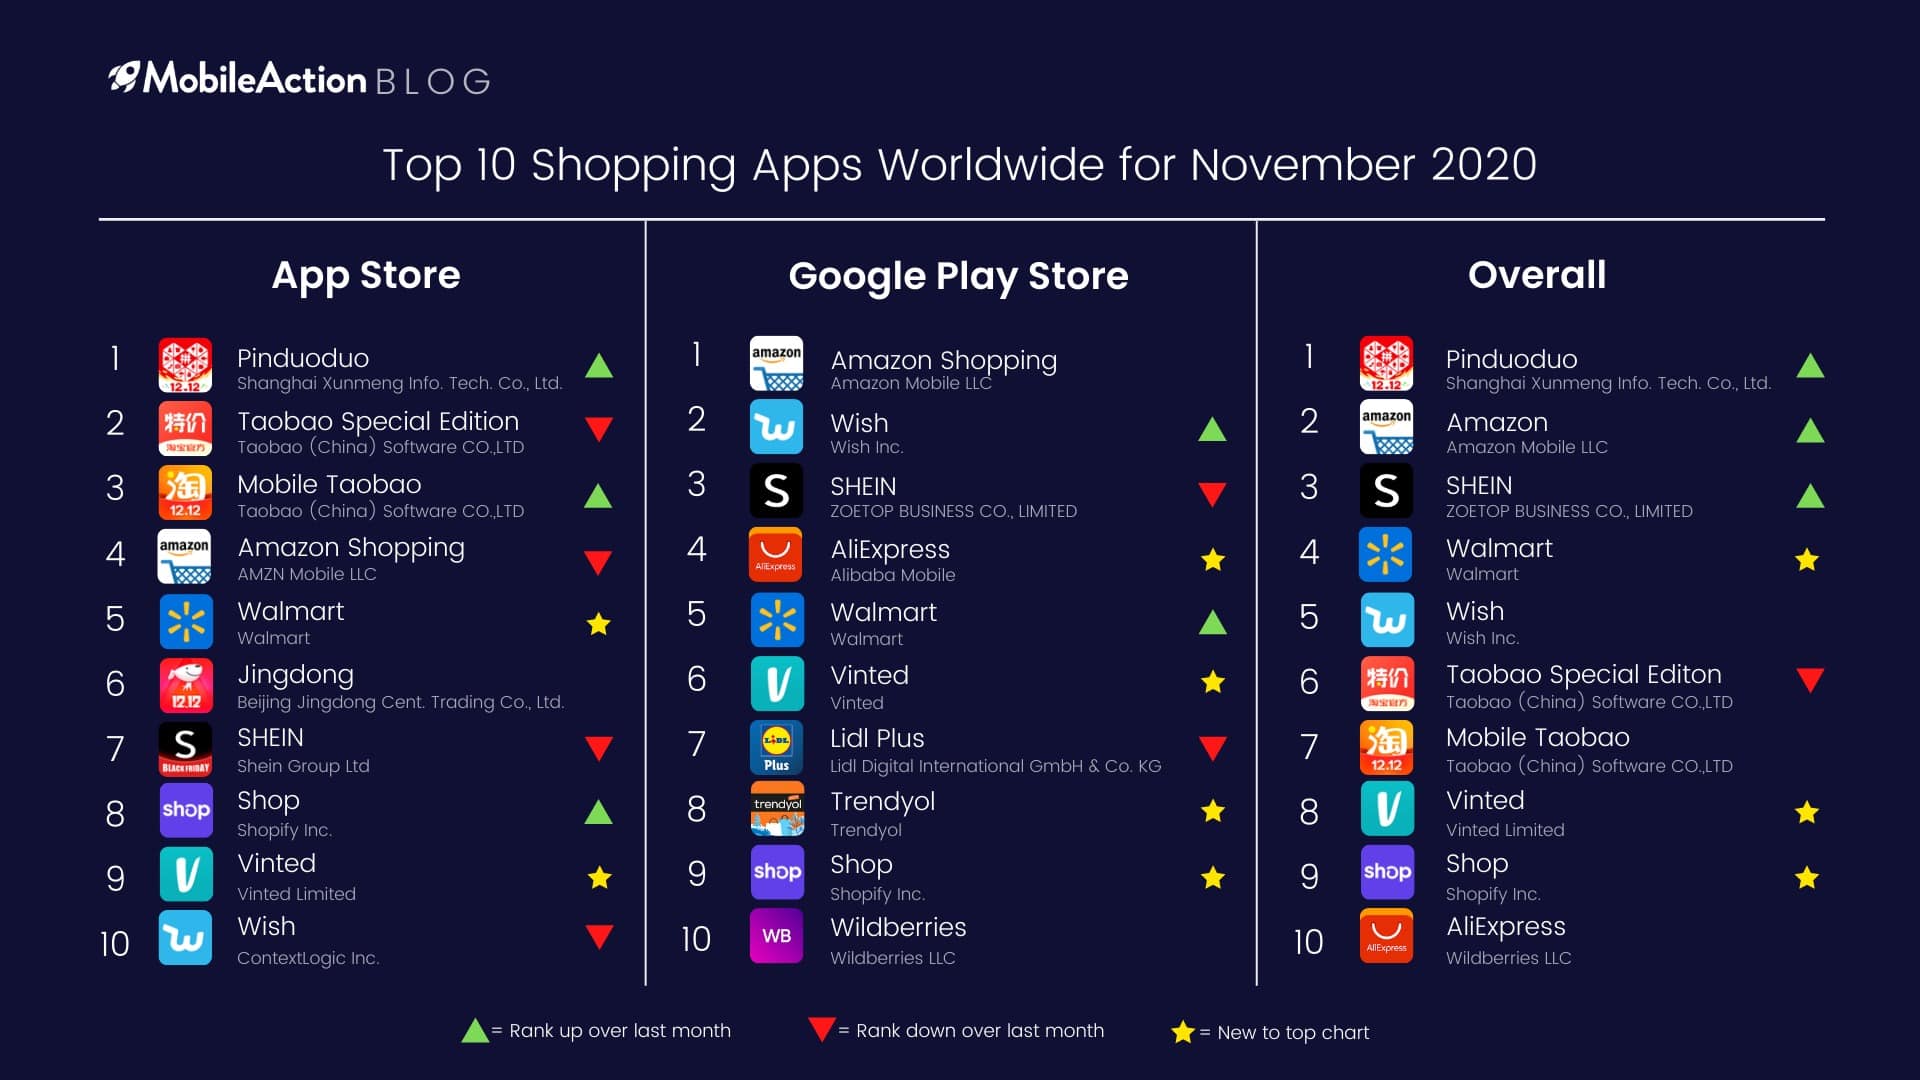 Top 10 Shopping Apps Worldwide for November 2020